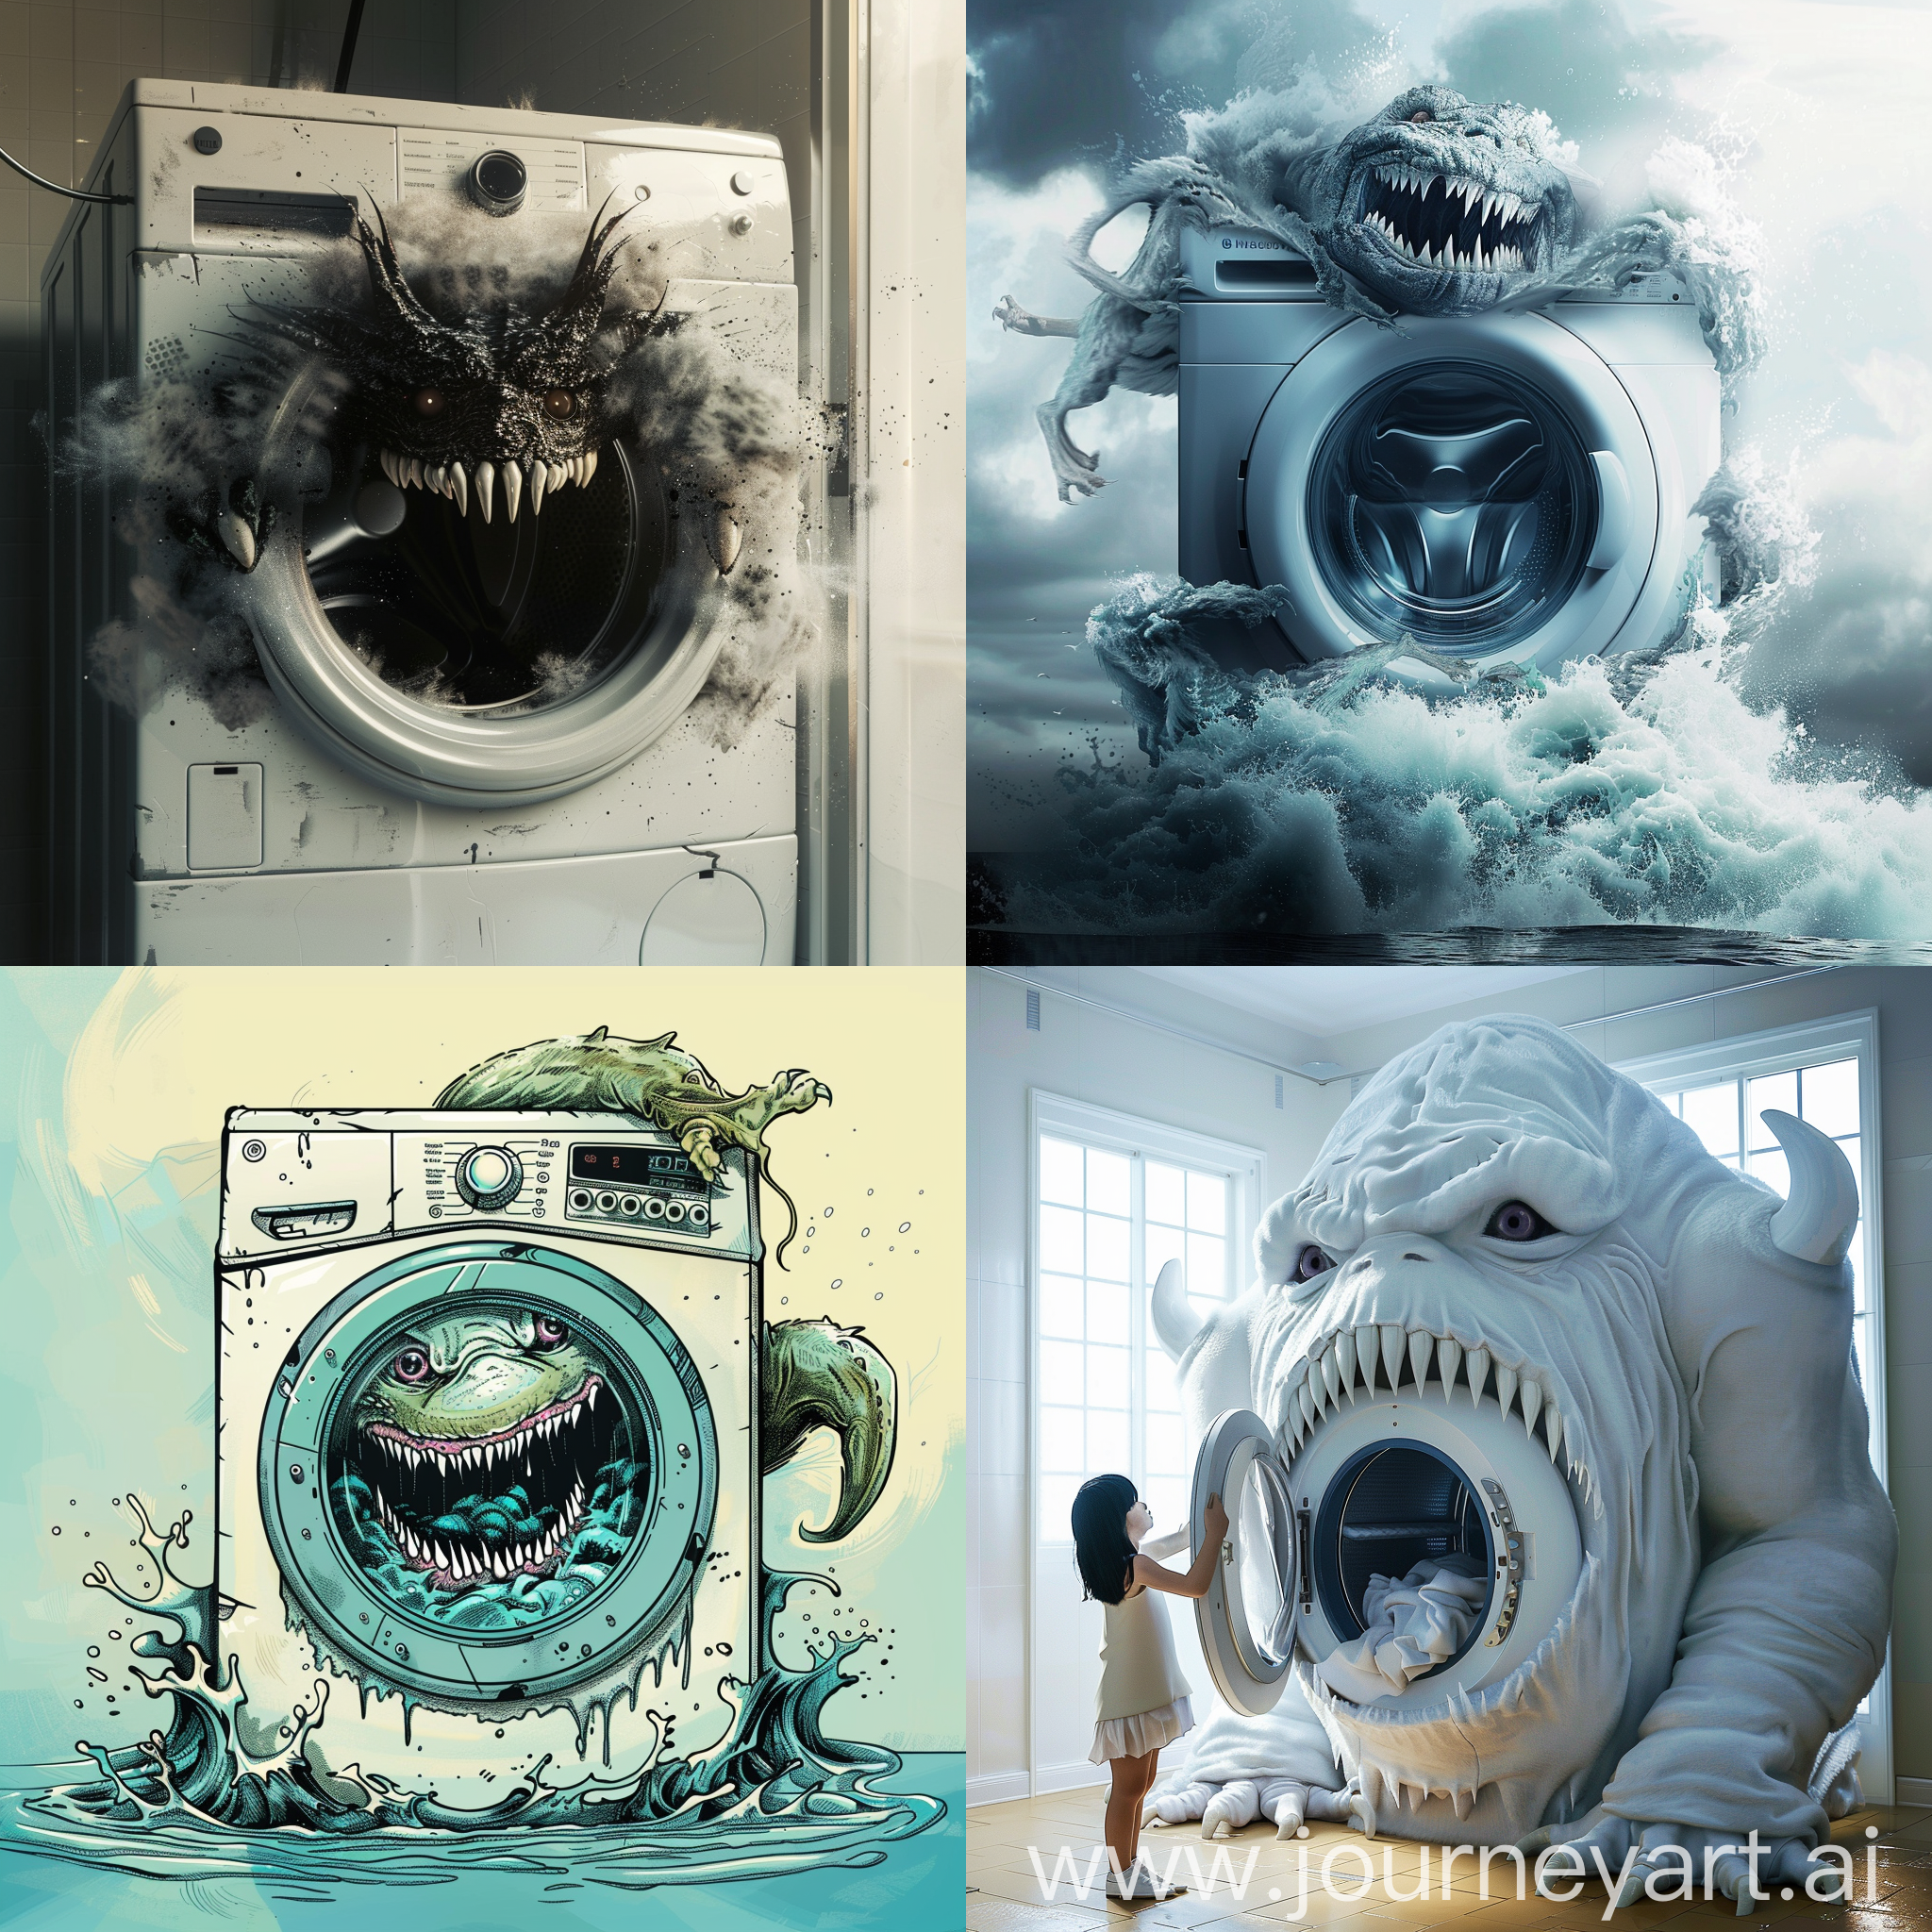 washing machine monster as a world devourer

